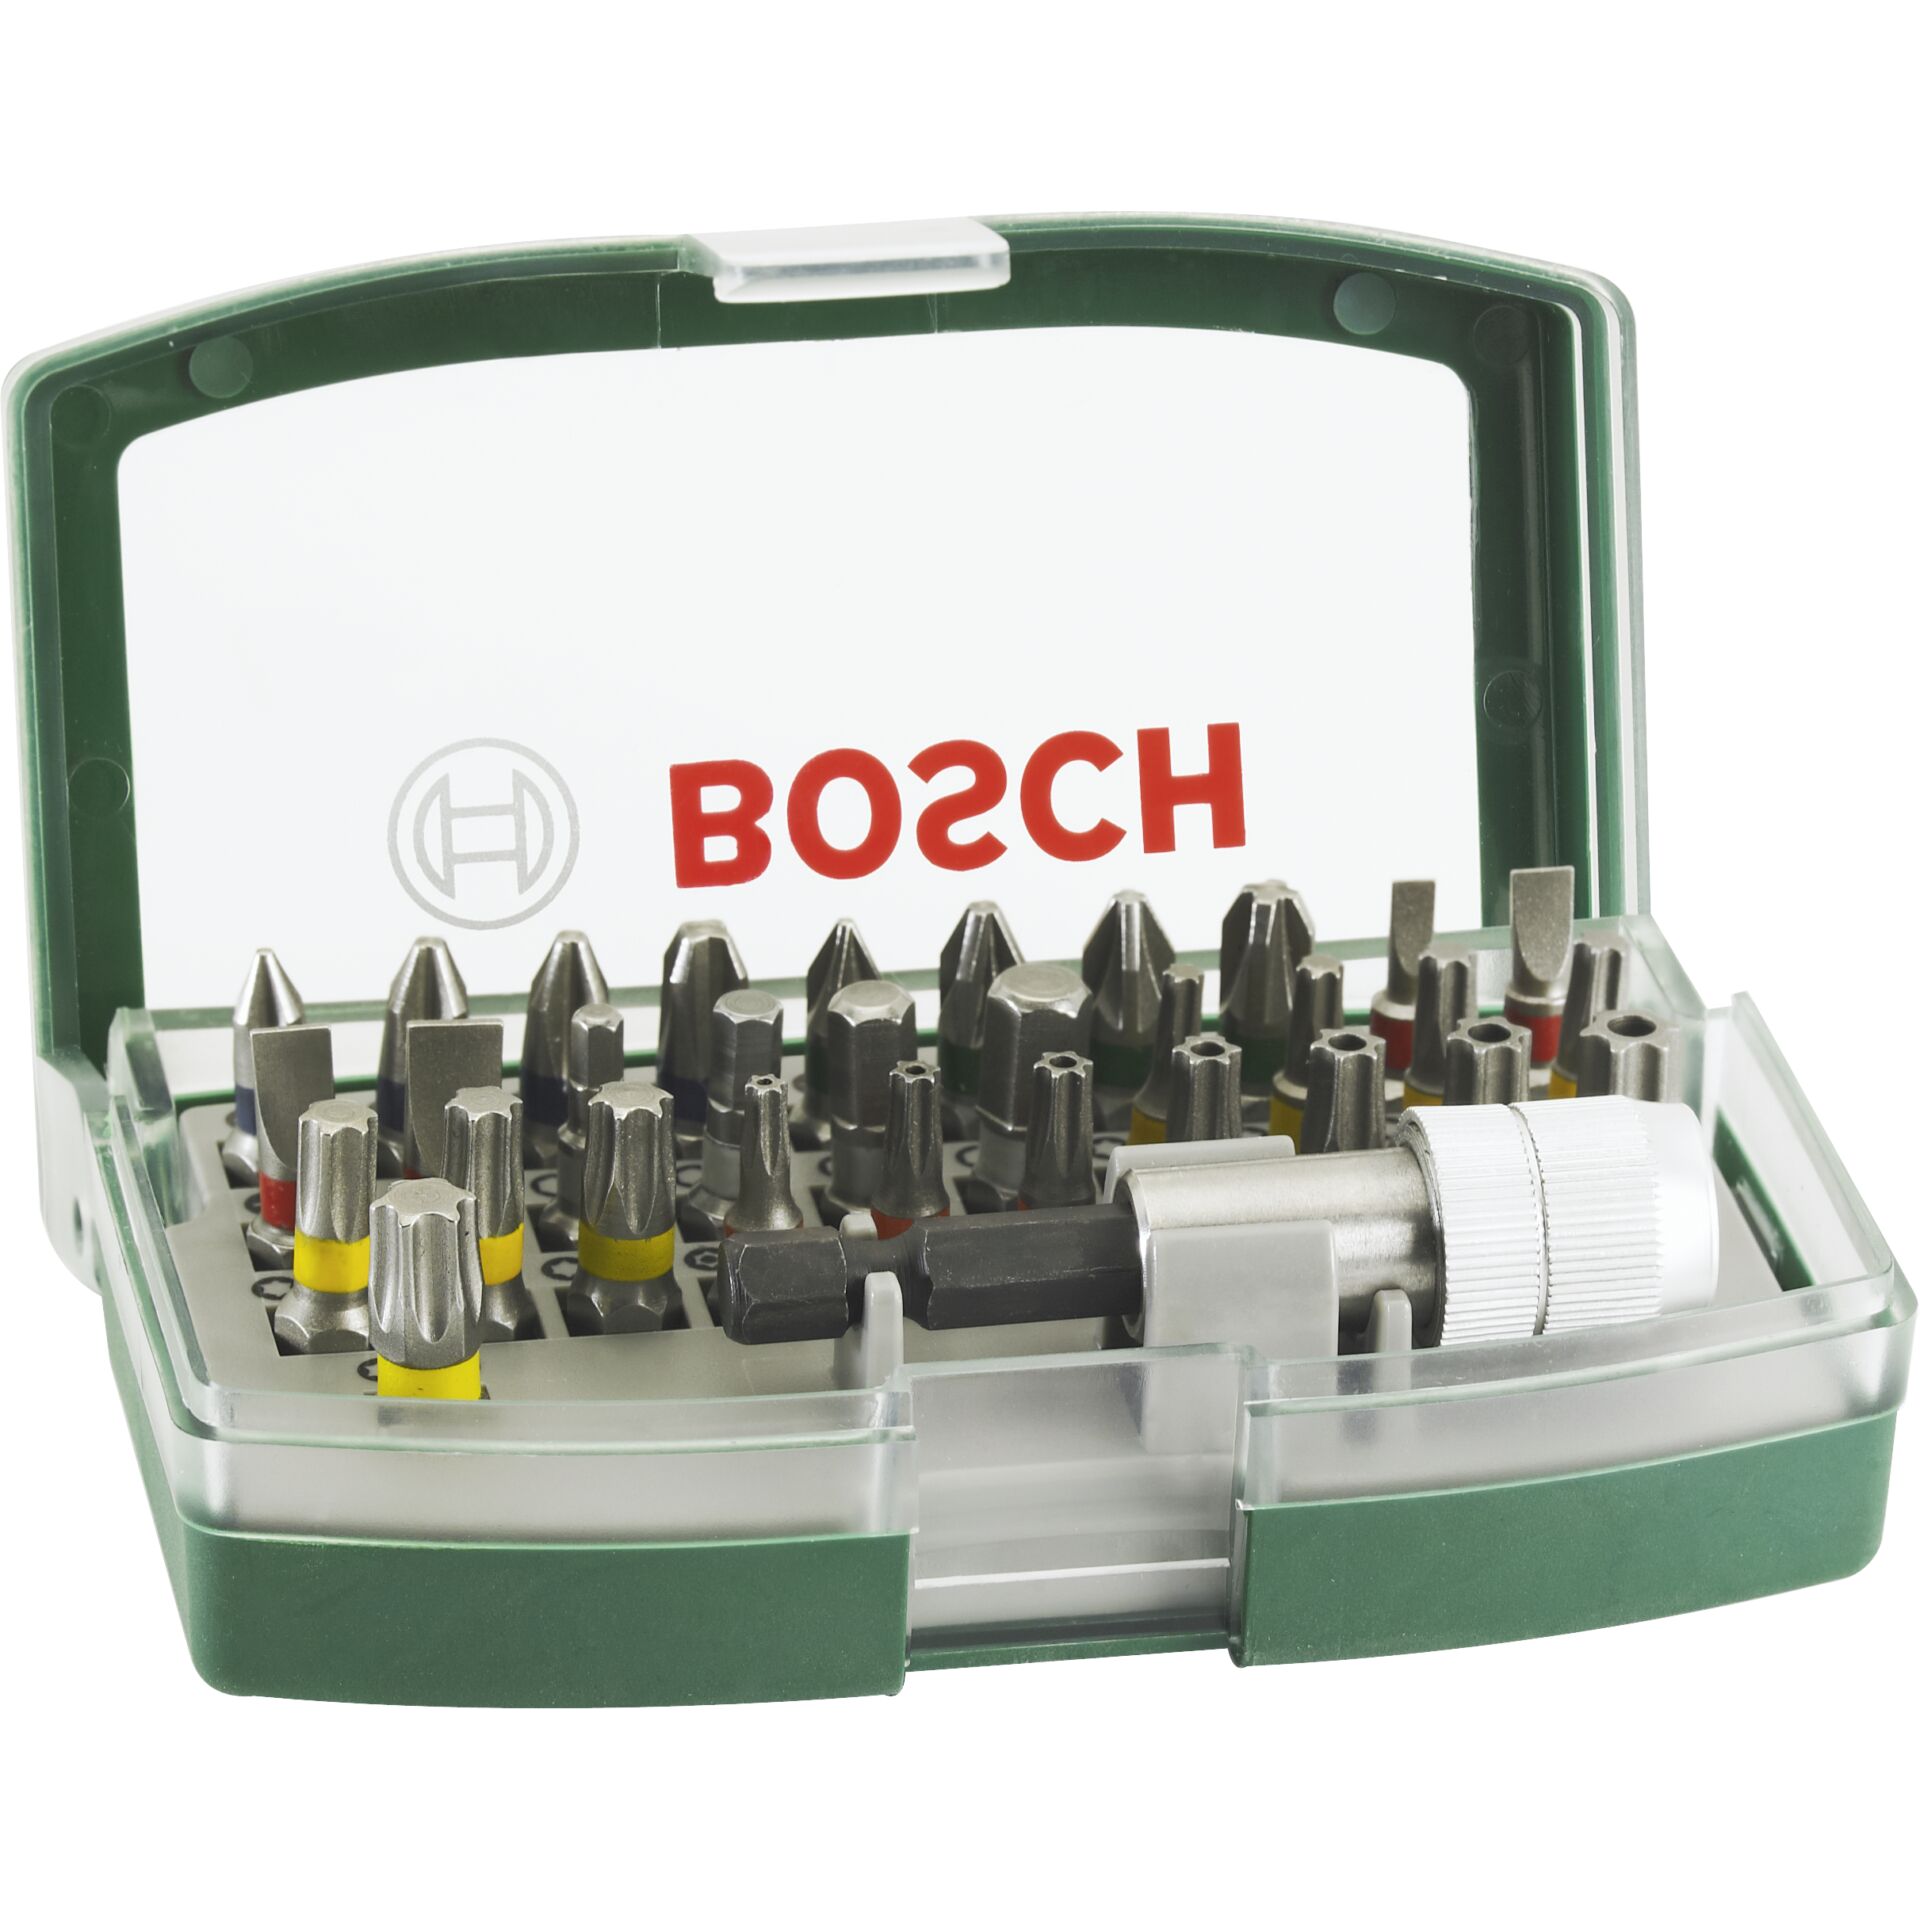 Bosch Prom 32-pcs. Screwdriver Bit Set in Display